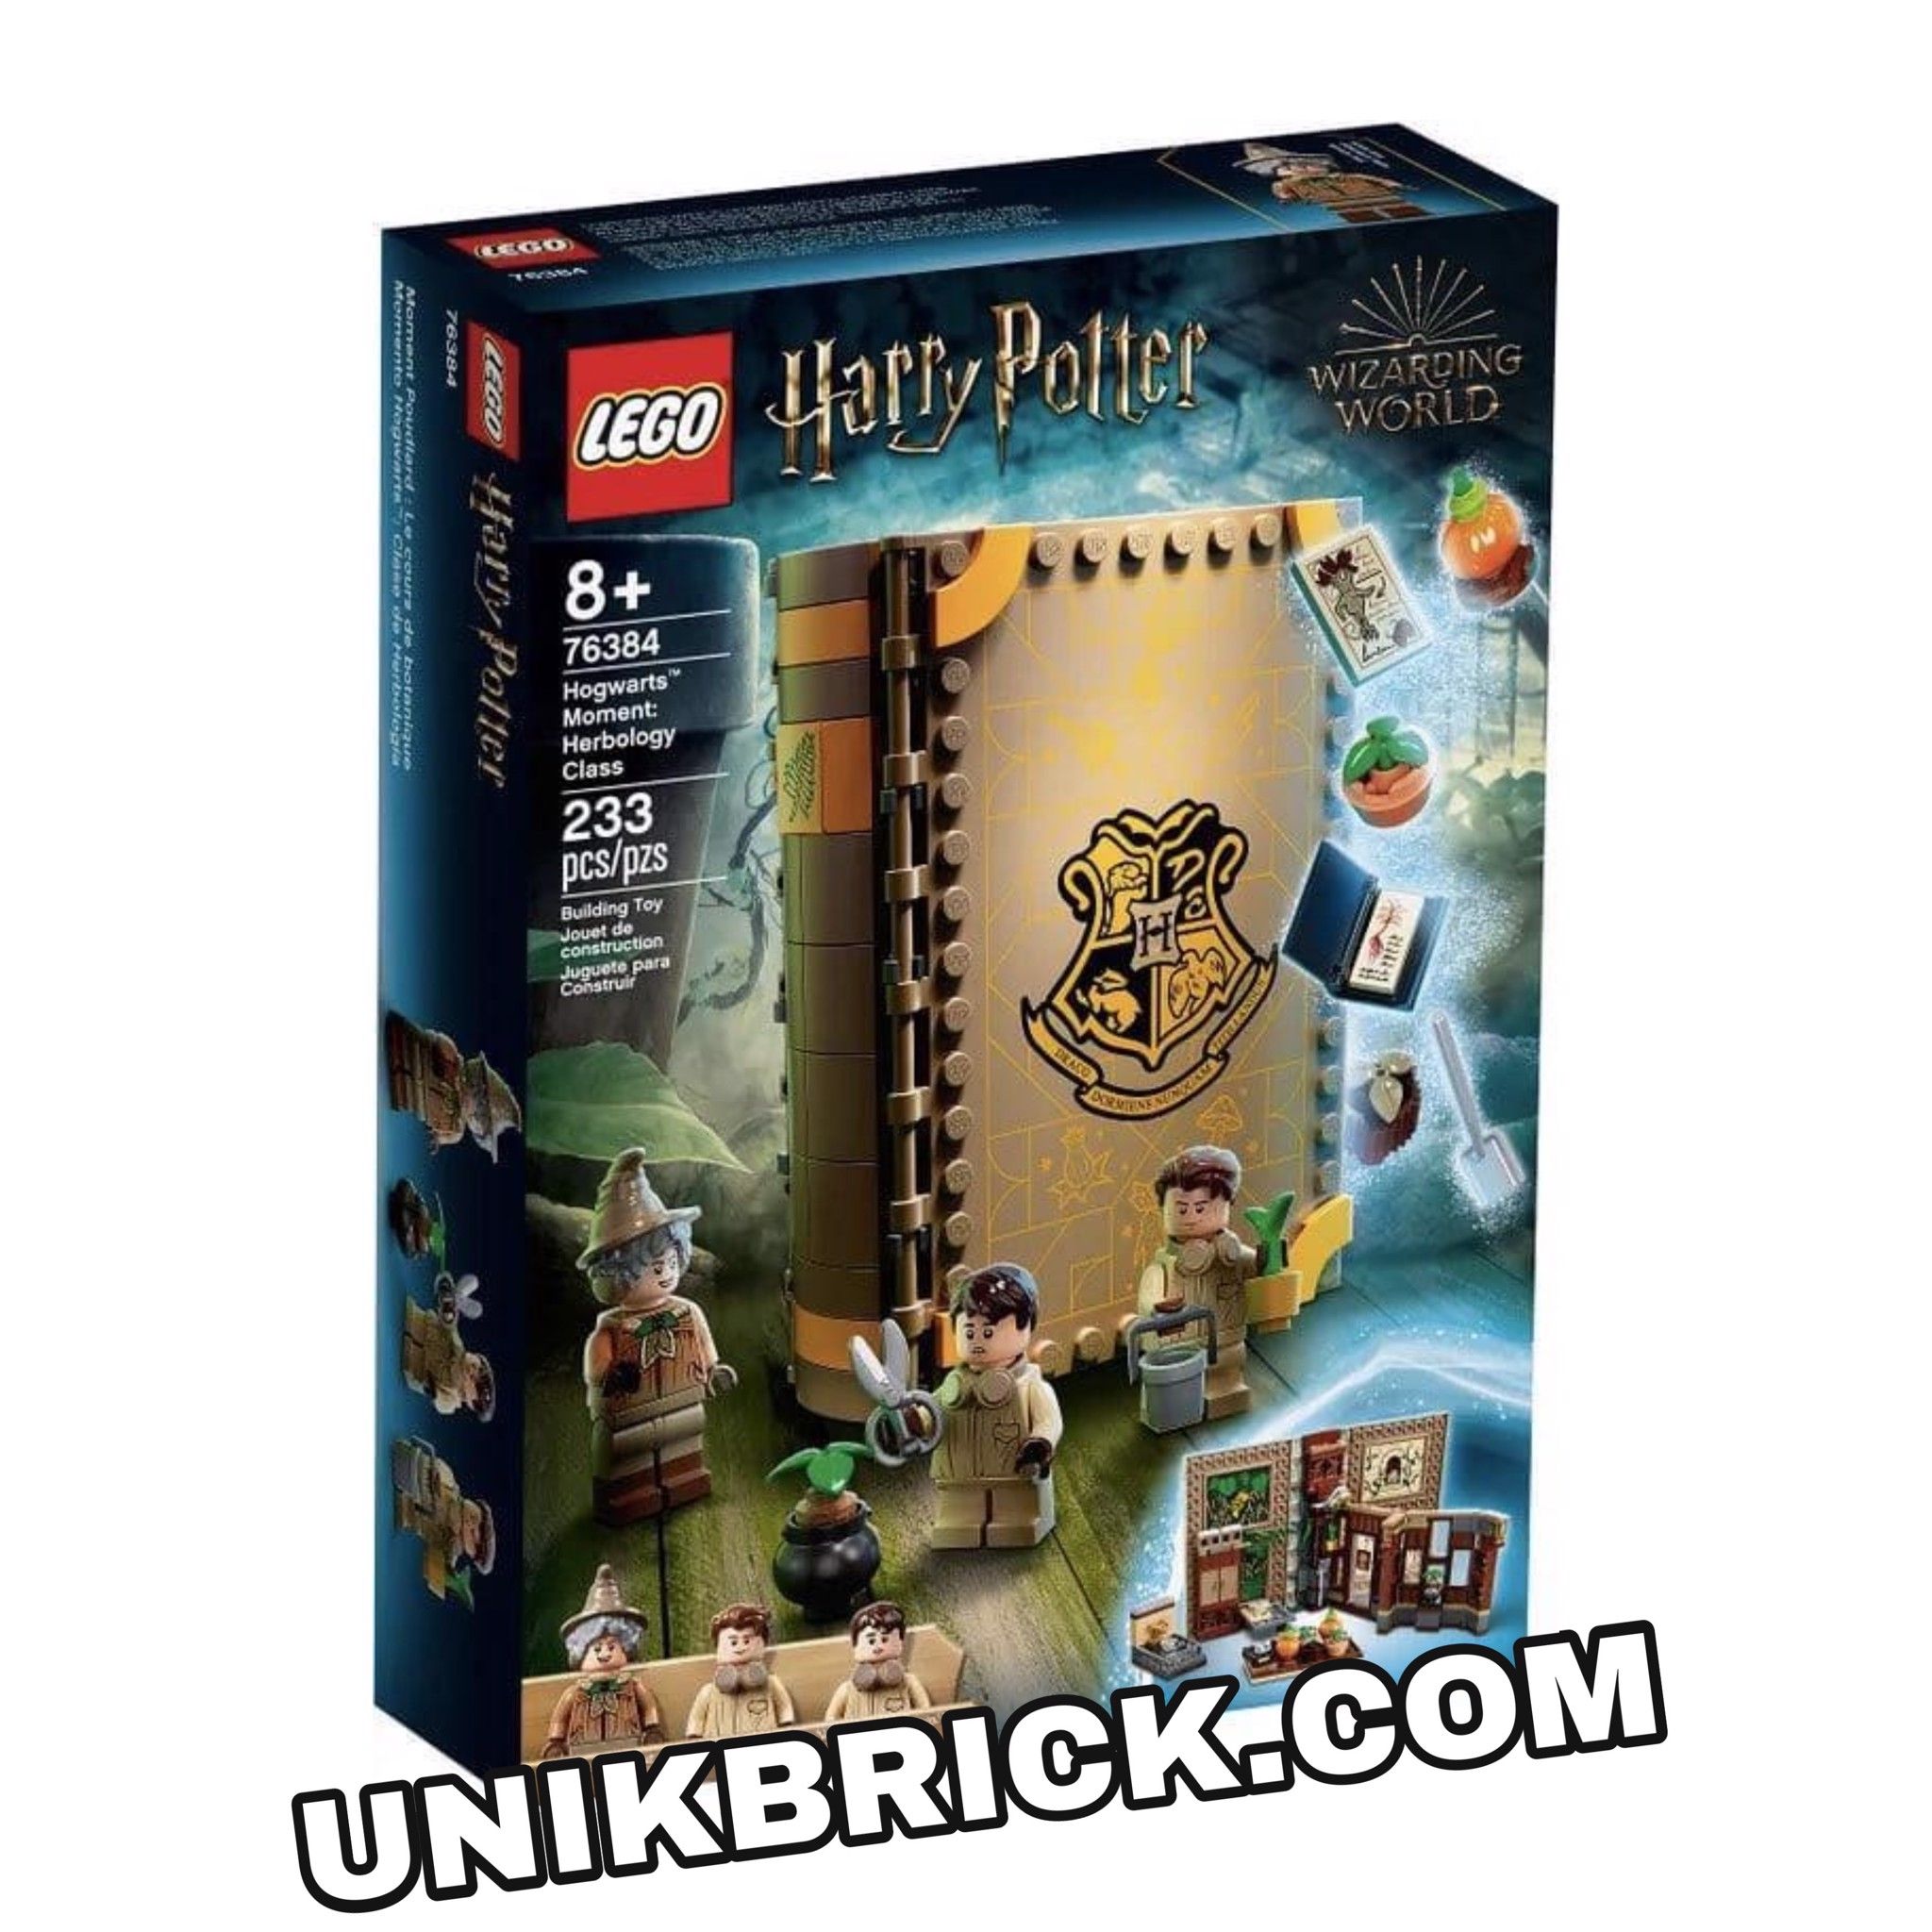 [CÓ HÀNG] LEGO Harry Potter 76384 Hogwarts Moment: Herbology Class